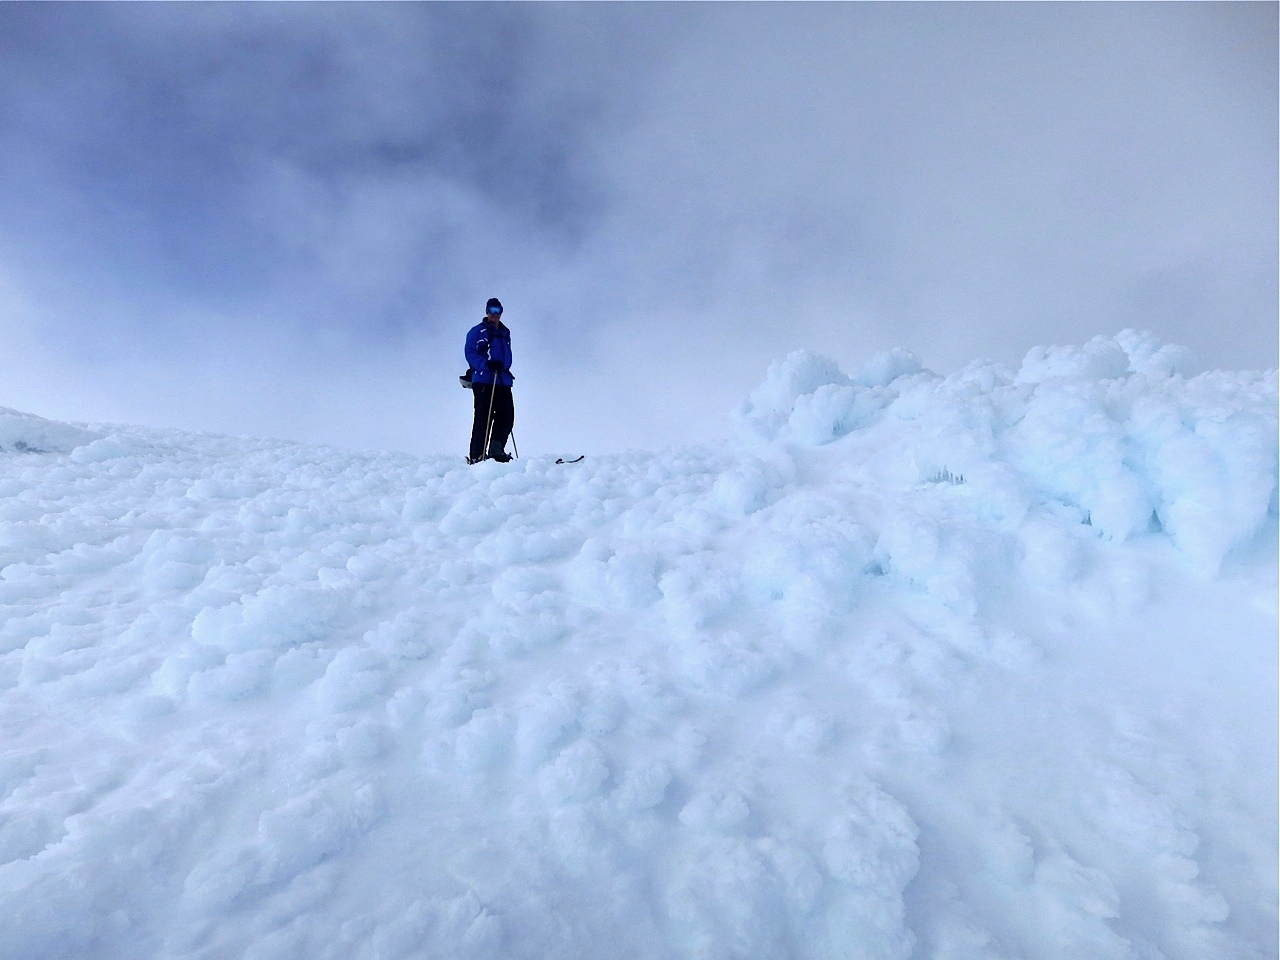 Rime ice on the summit of The Ramshead above Thredbo, Australia